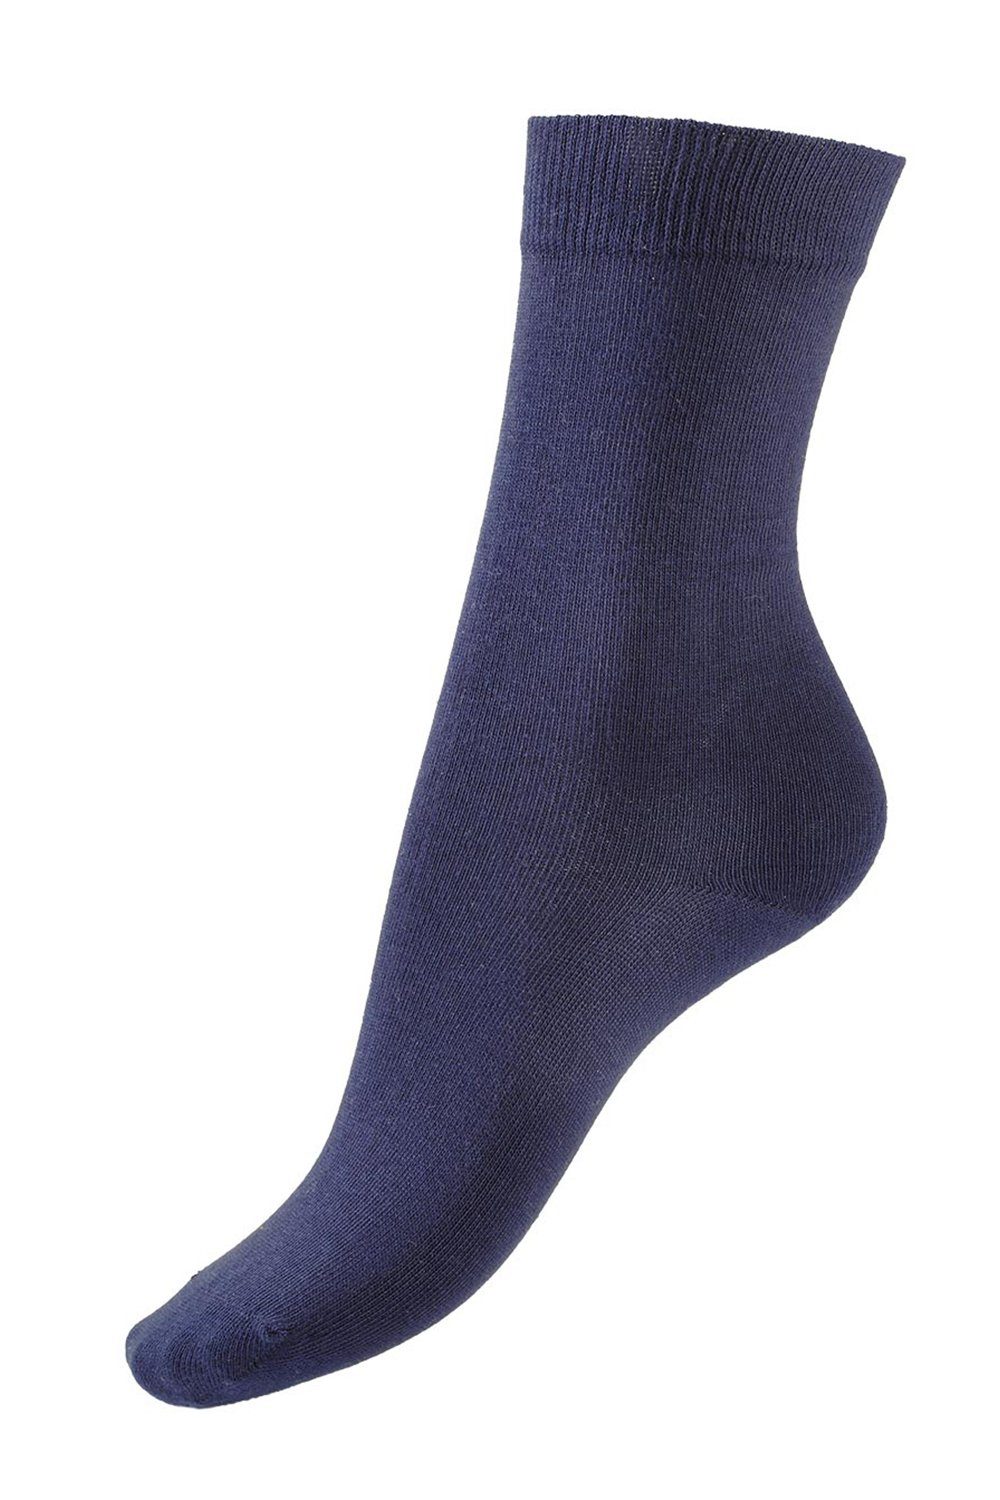 COMPRESSANA Socken Gesundheits-Socken GoWell MED Soft, 2er-Pack 3010 (2er-Pack) nachtblau